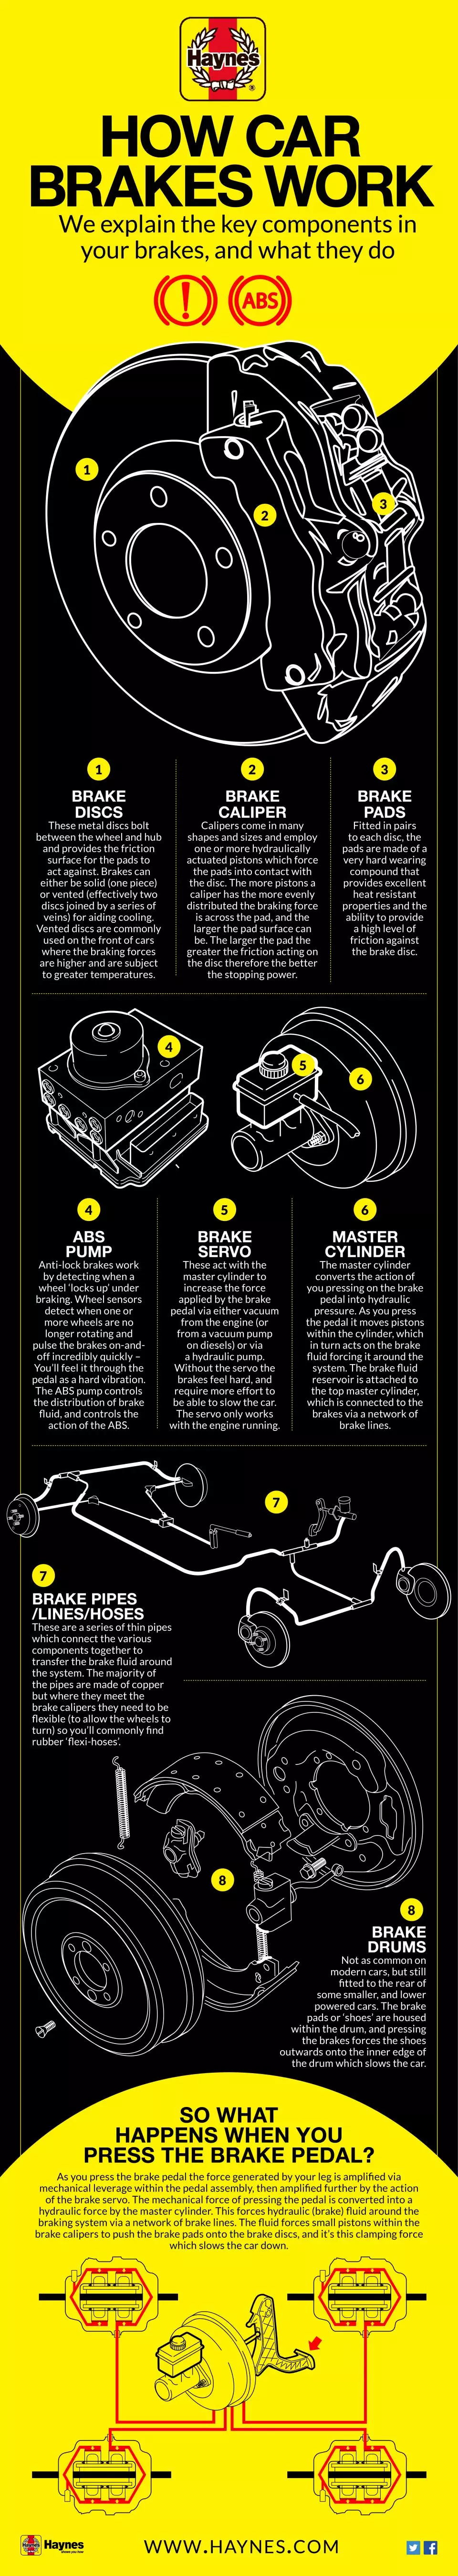 How do car brakes work?